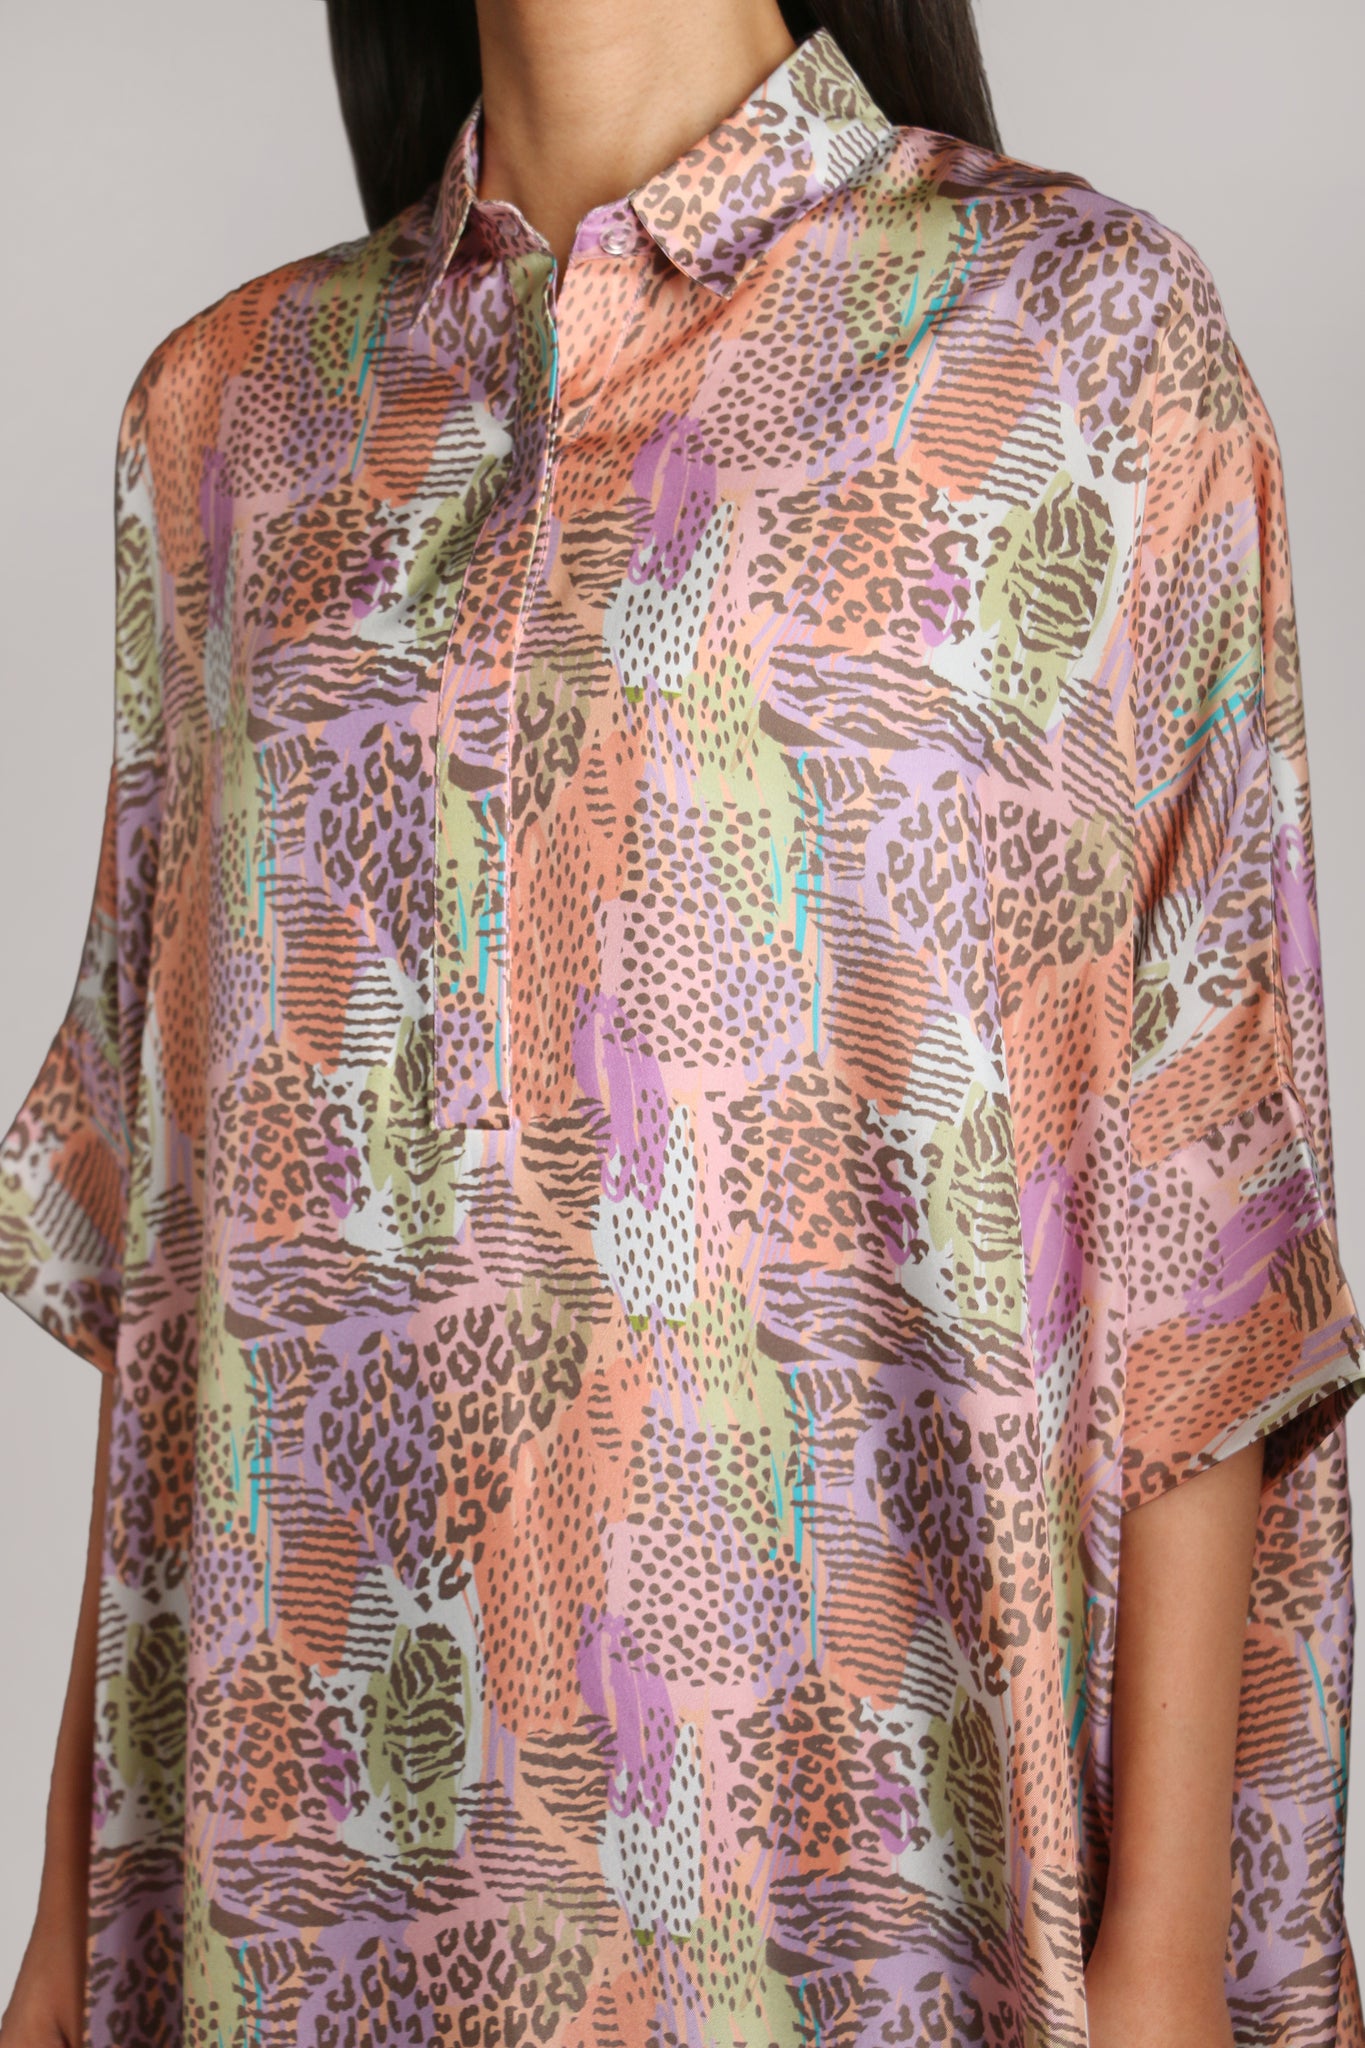 Colorful Silk Shirt Dress (012)